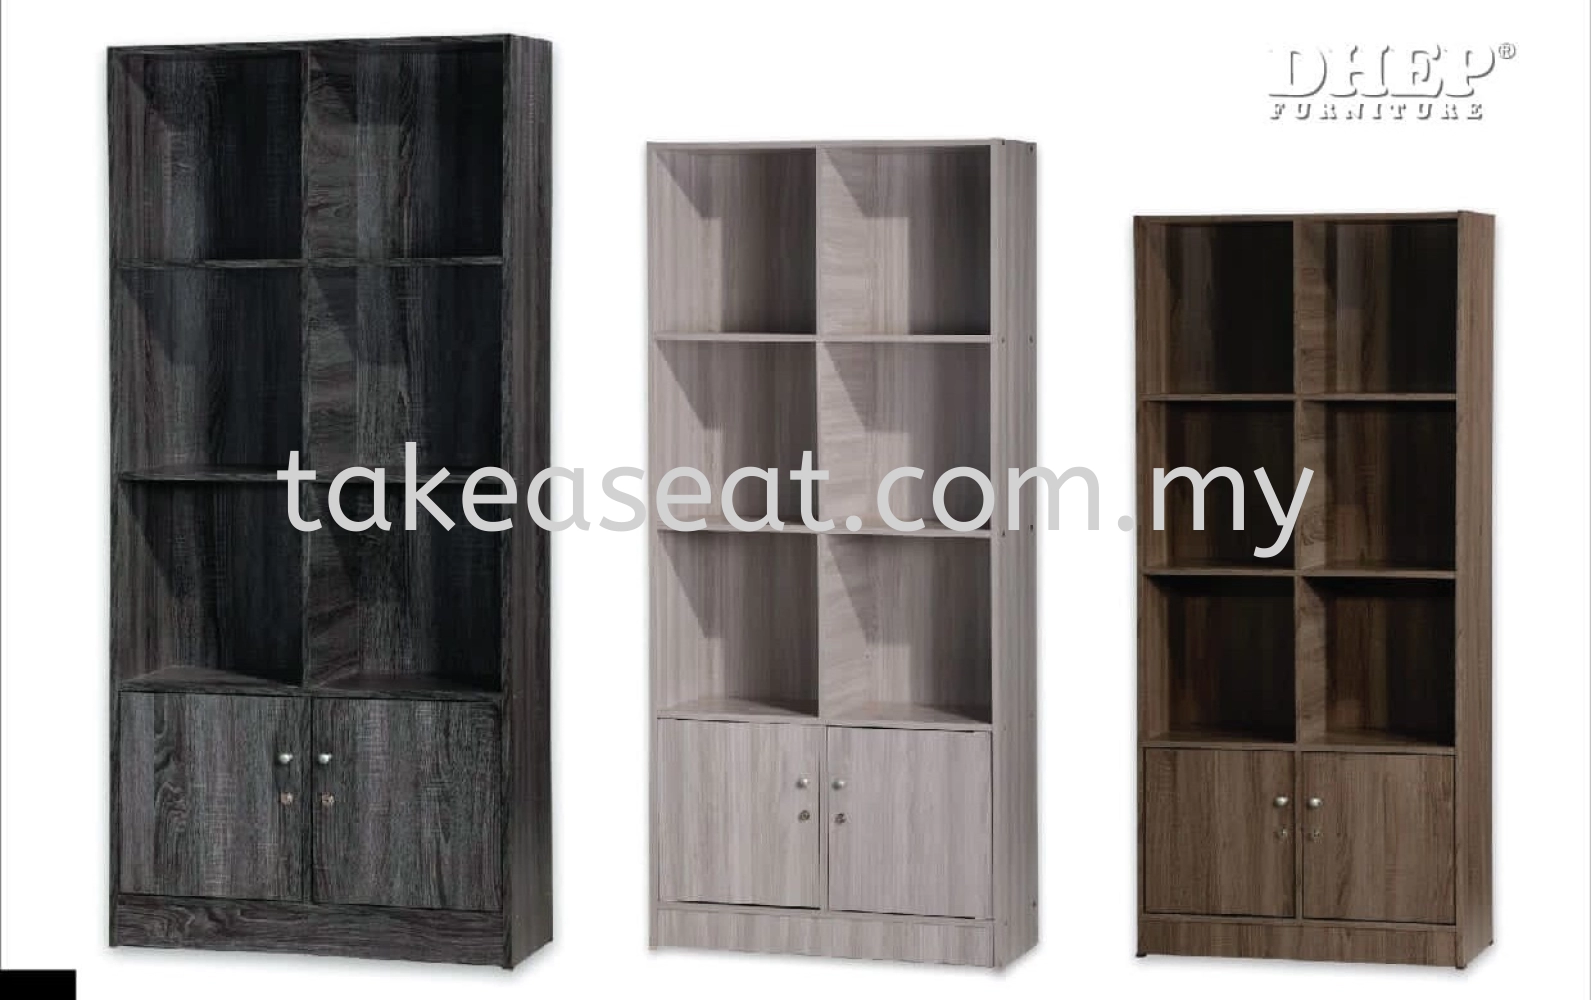 File Cabinet (Wood)